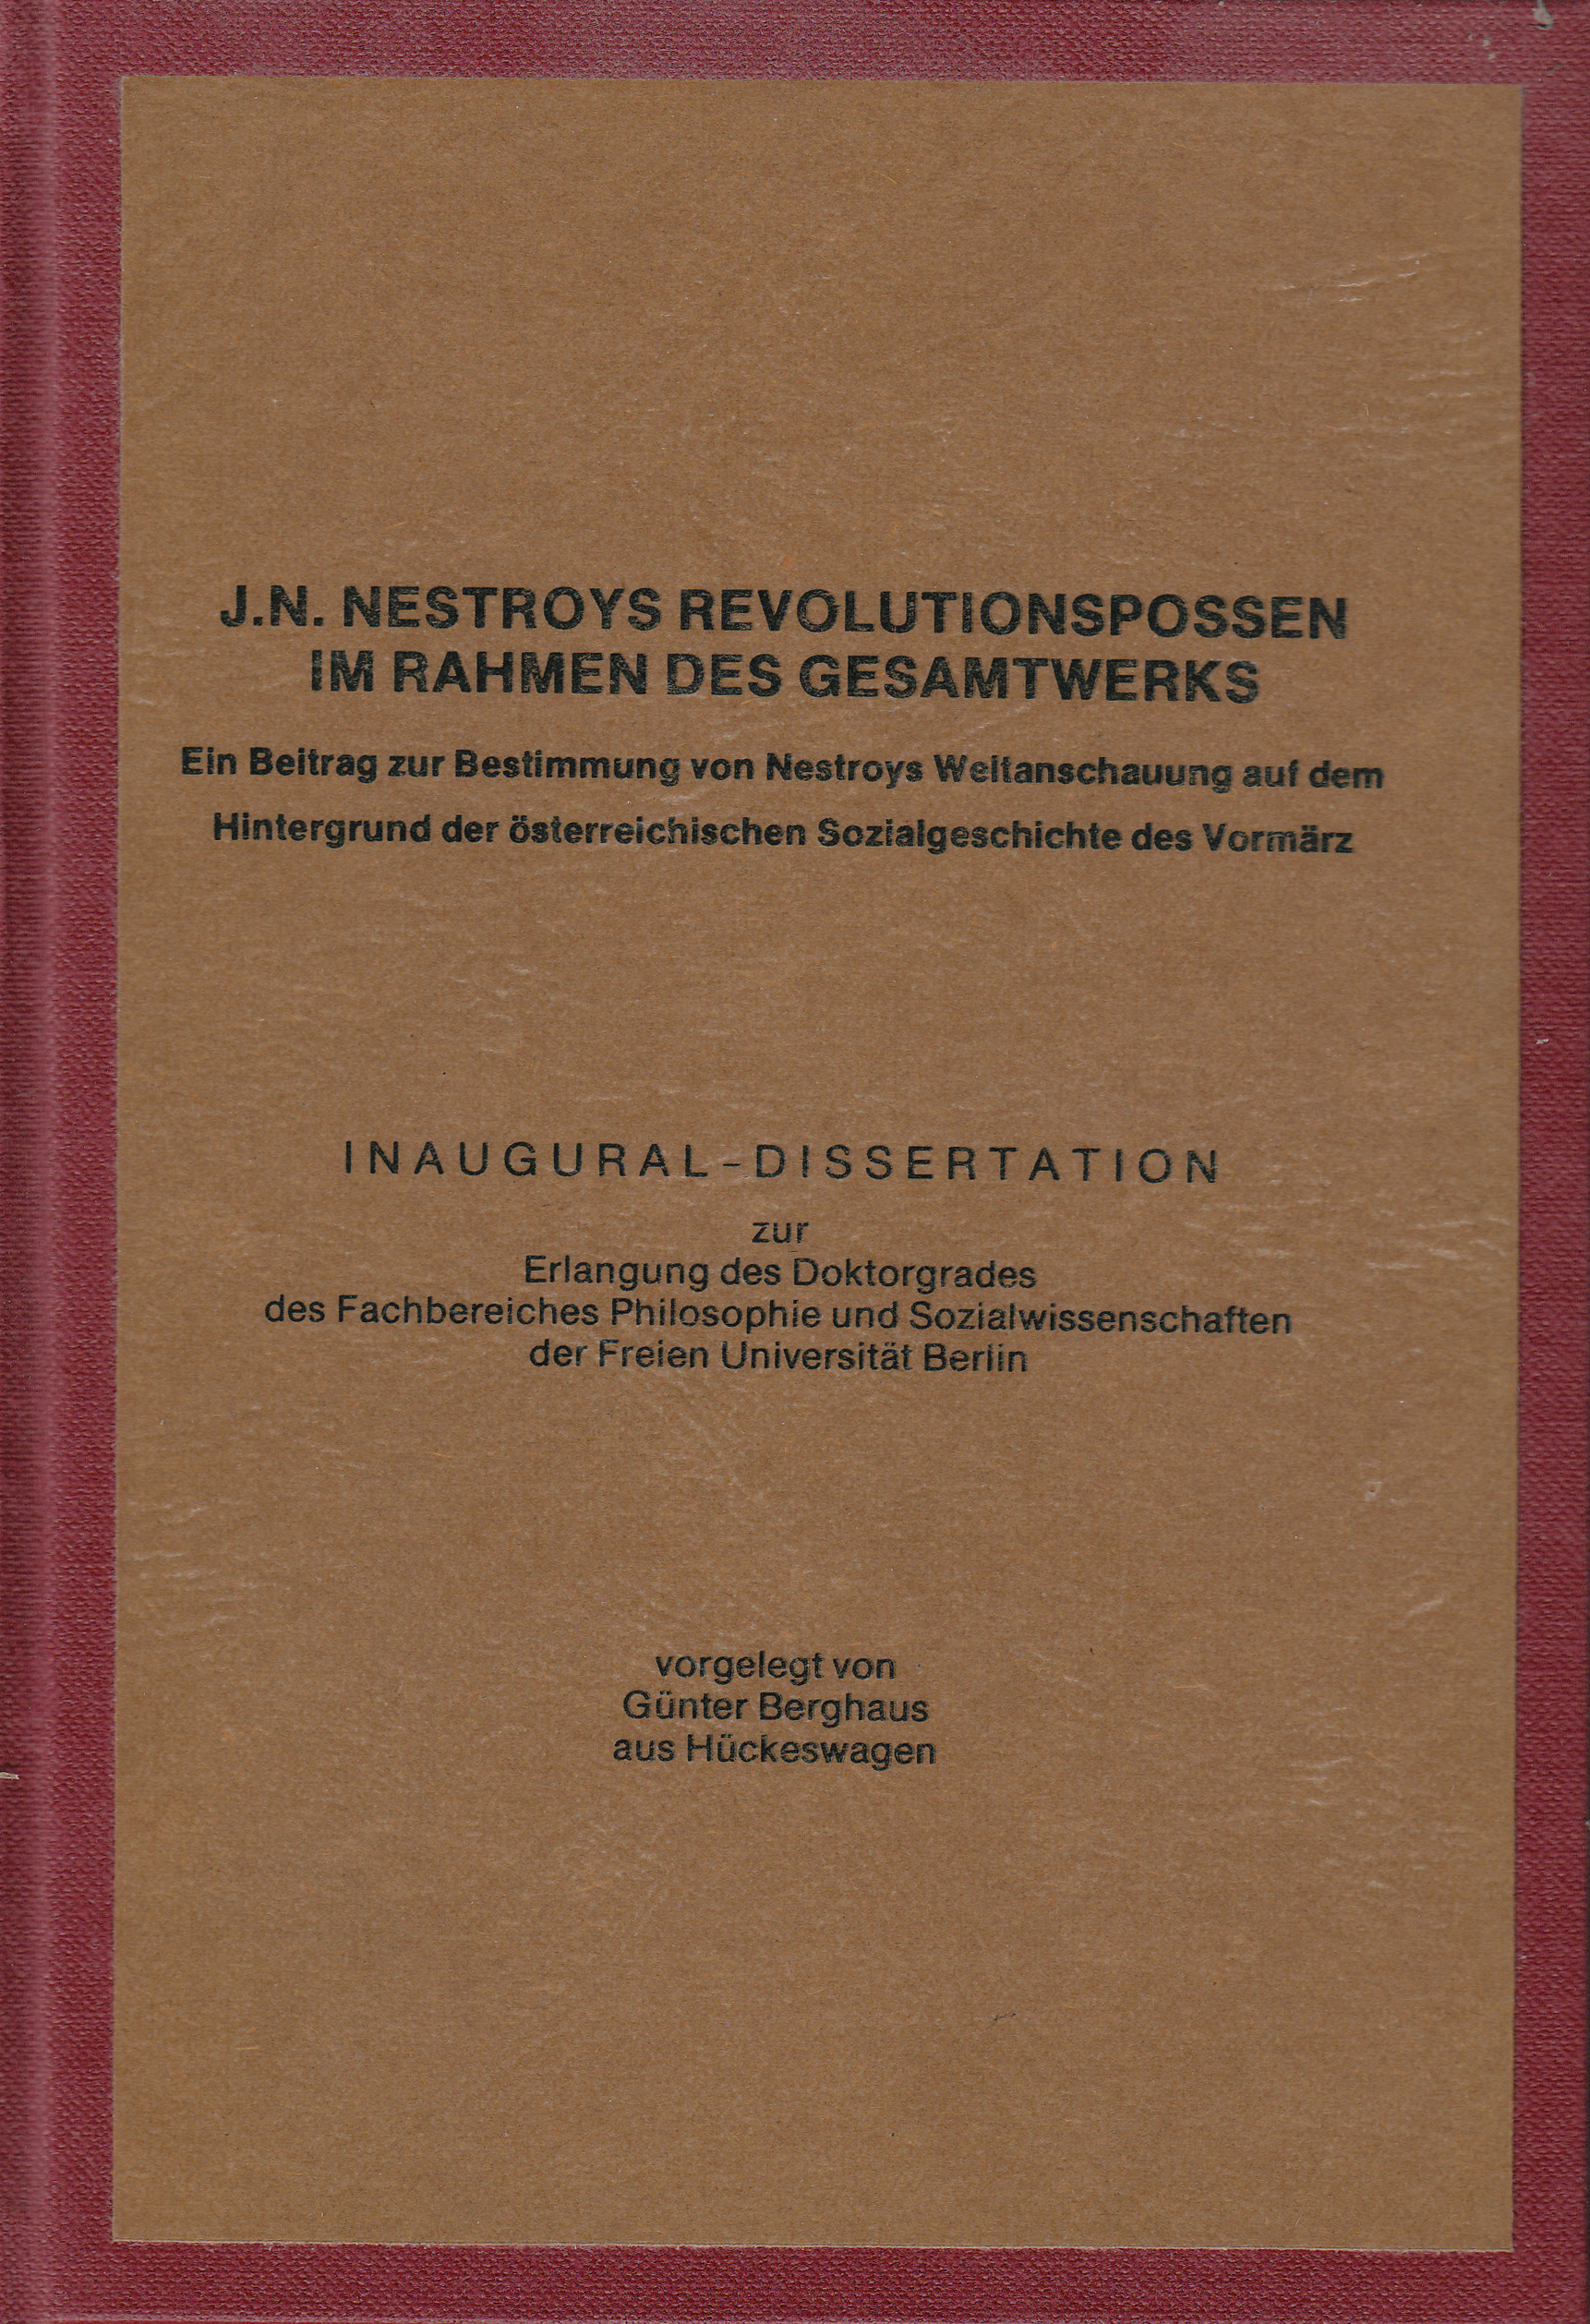 Inaugural Dissertation Cover